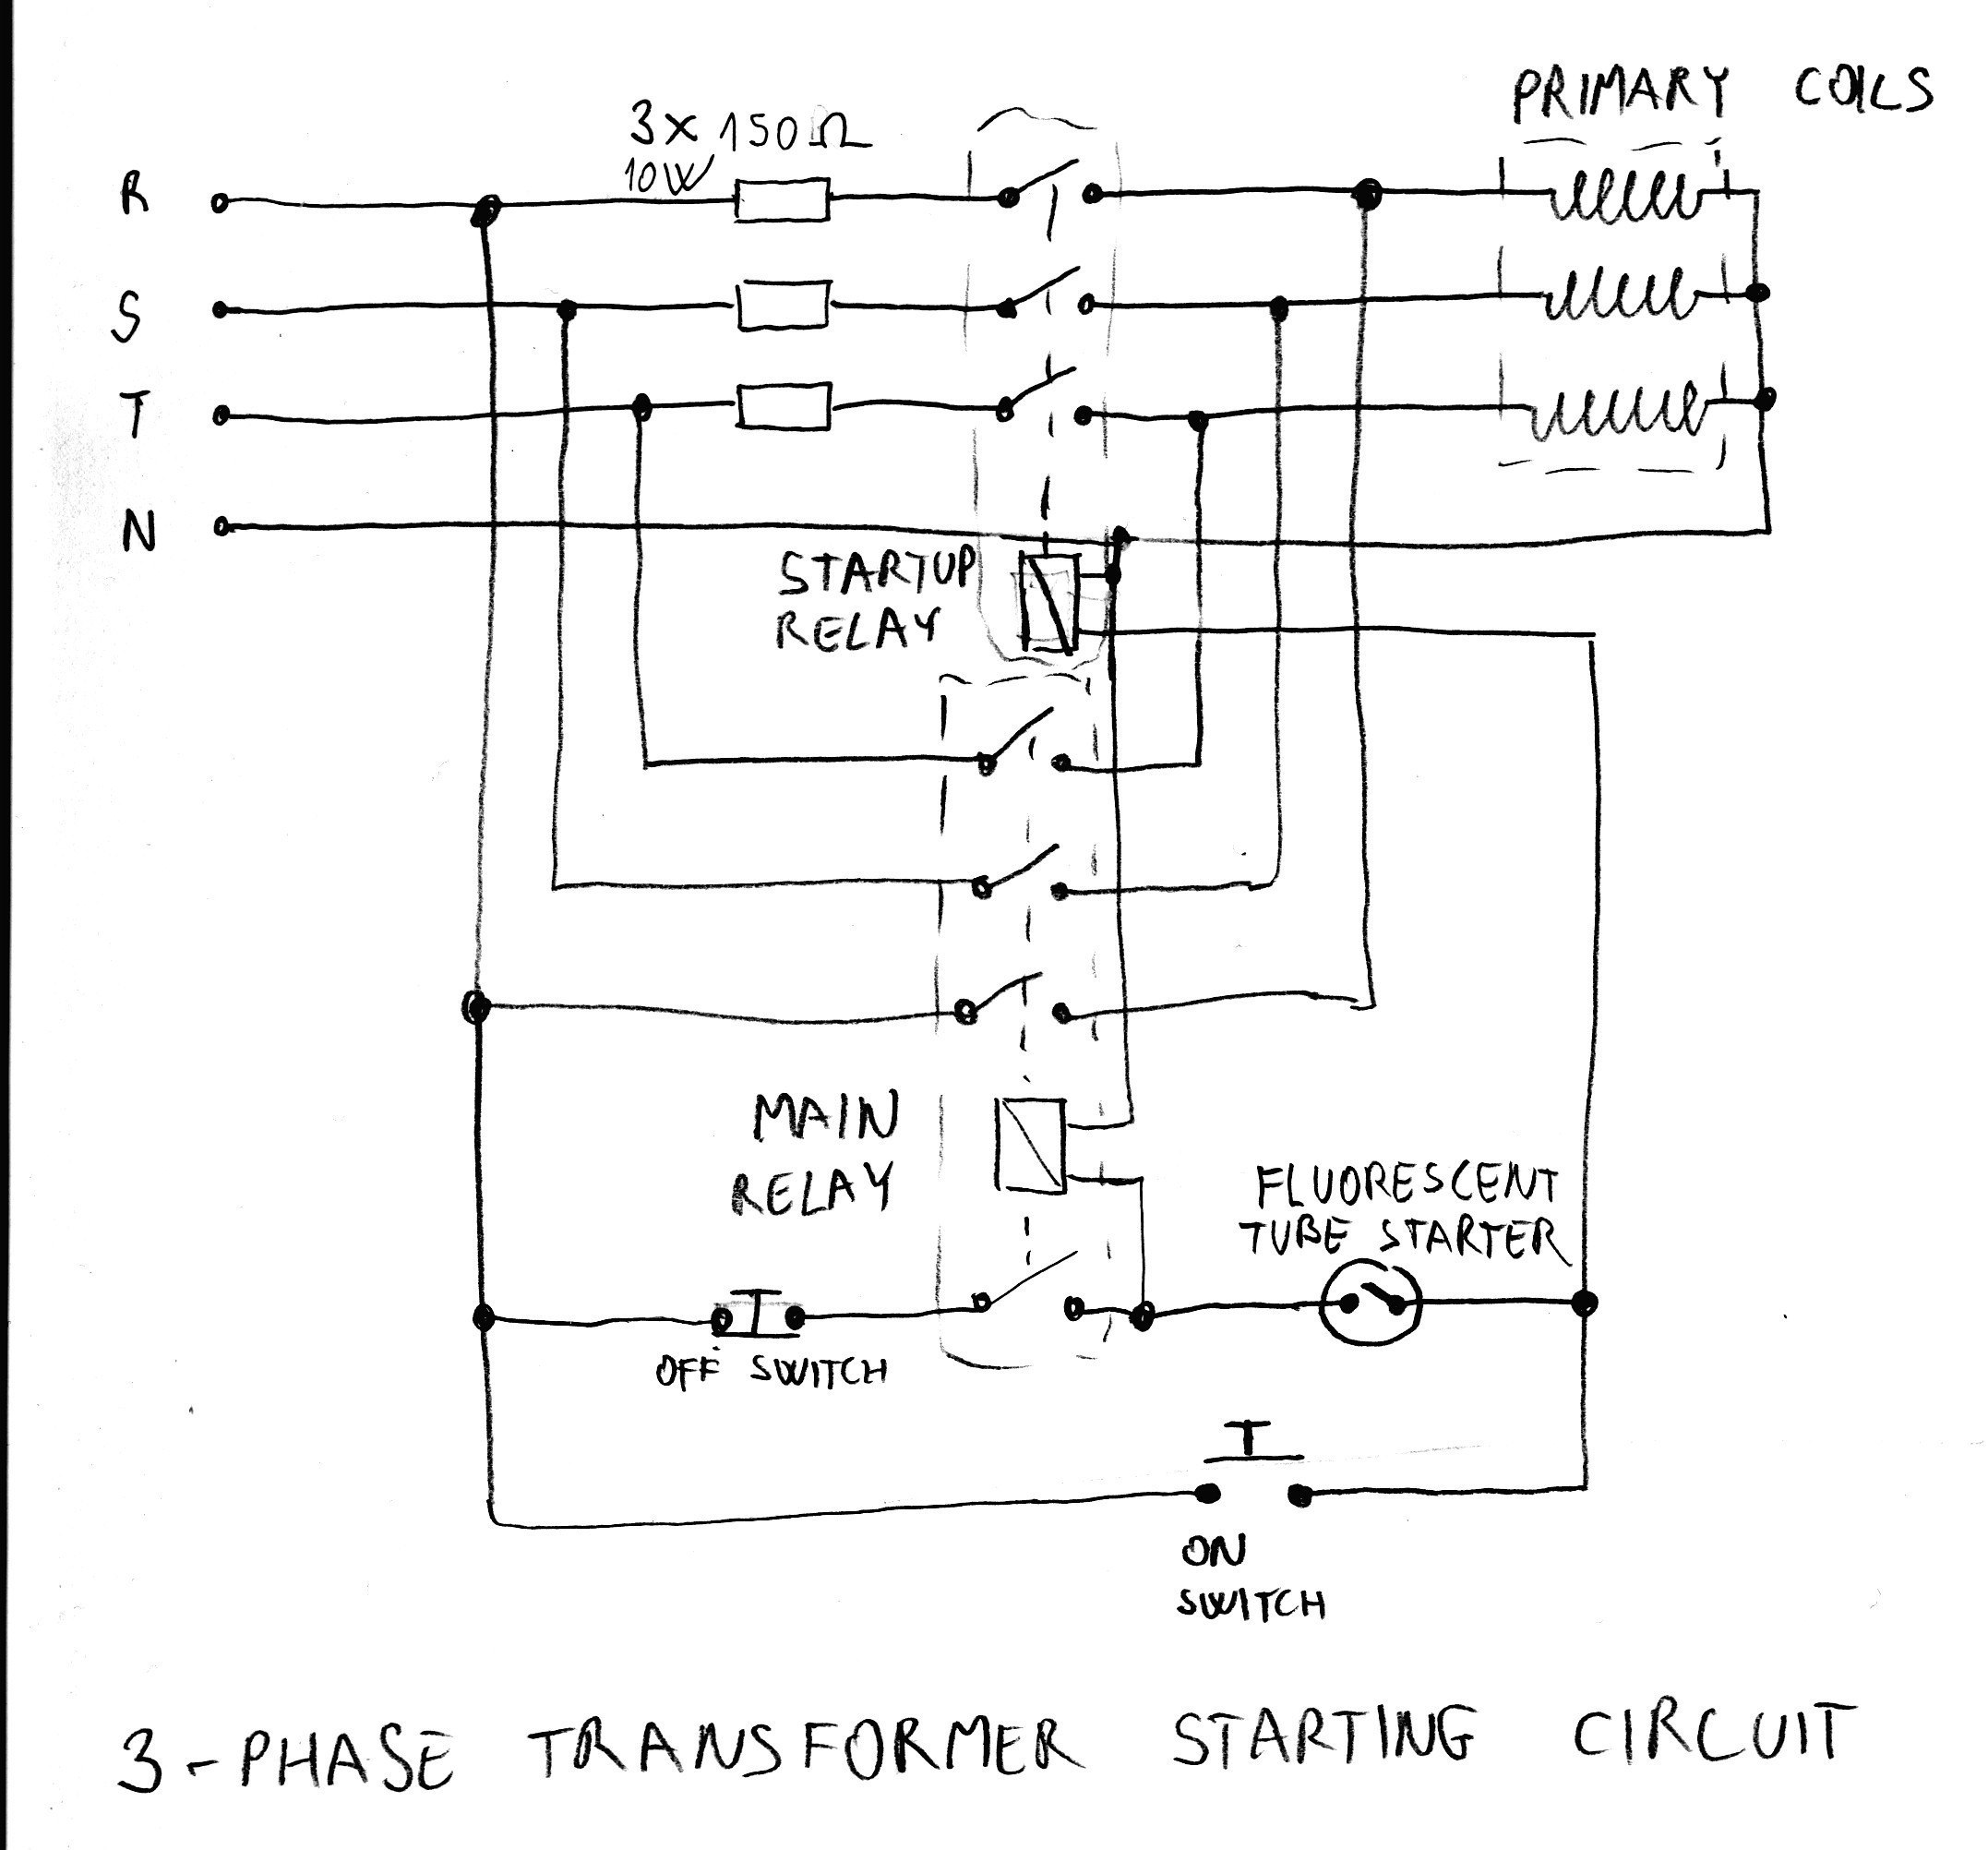 24 Volt Transformer Wiring Diagram Ac Transformer Wiring Experts Wiring Diagram • Of 24 Volt Transformer Wiring Diagram